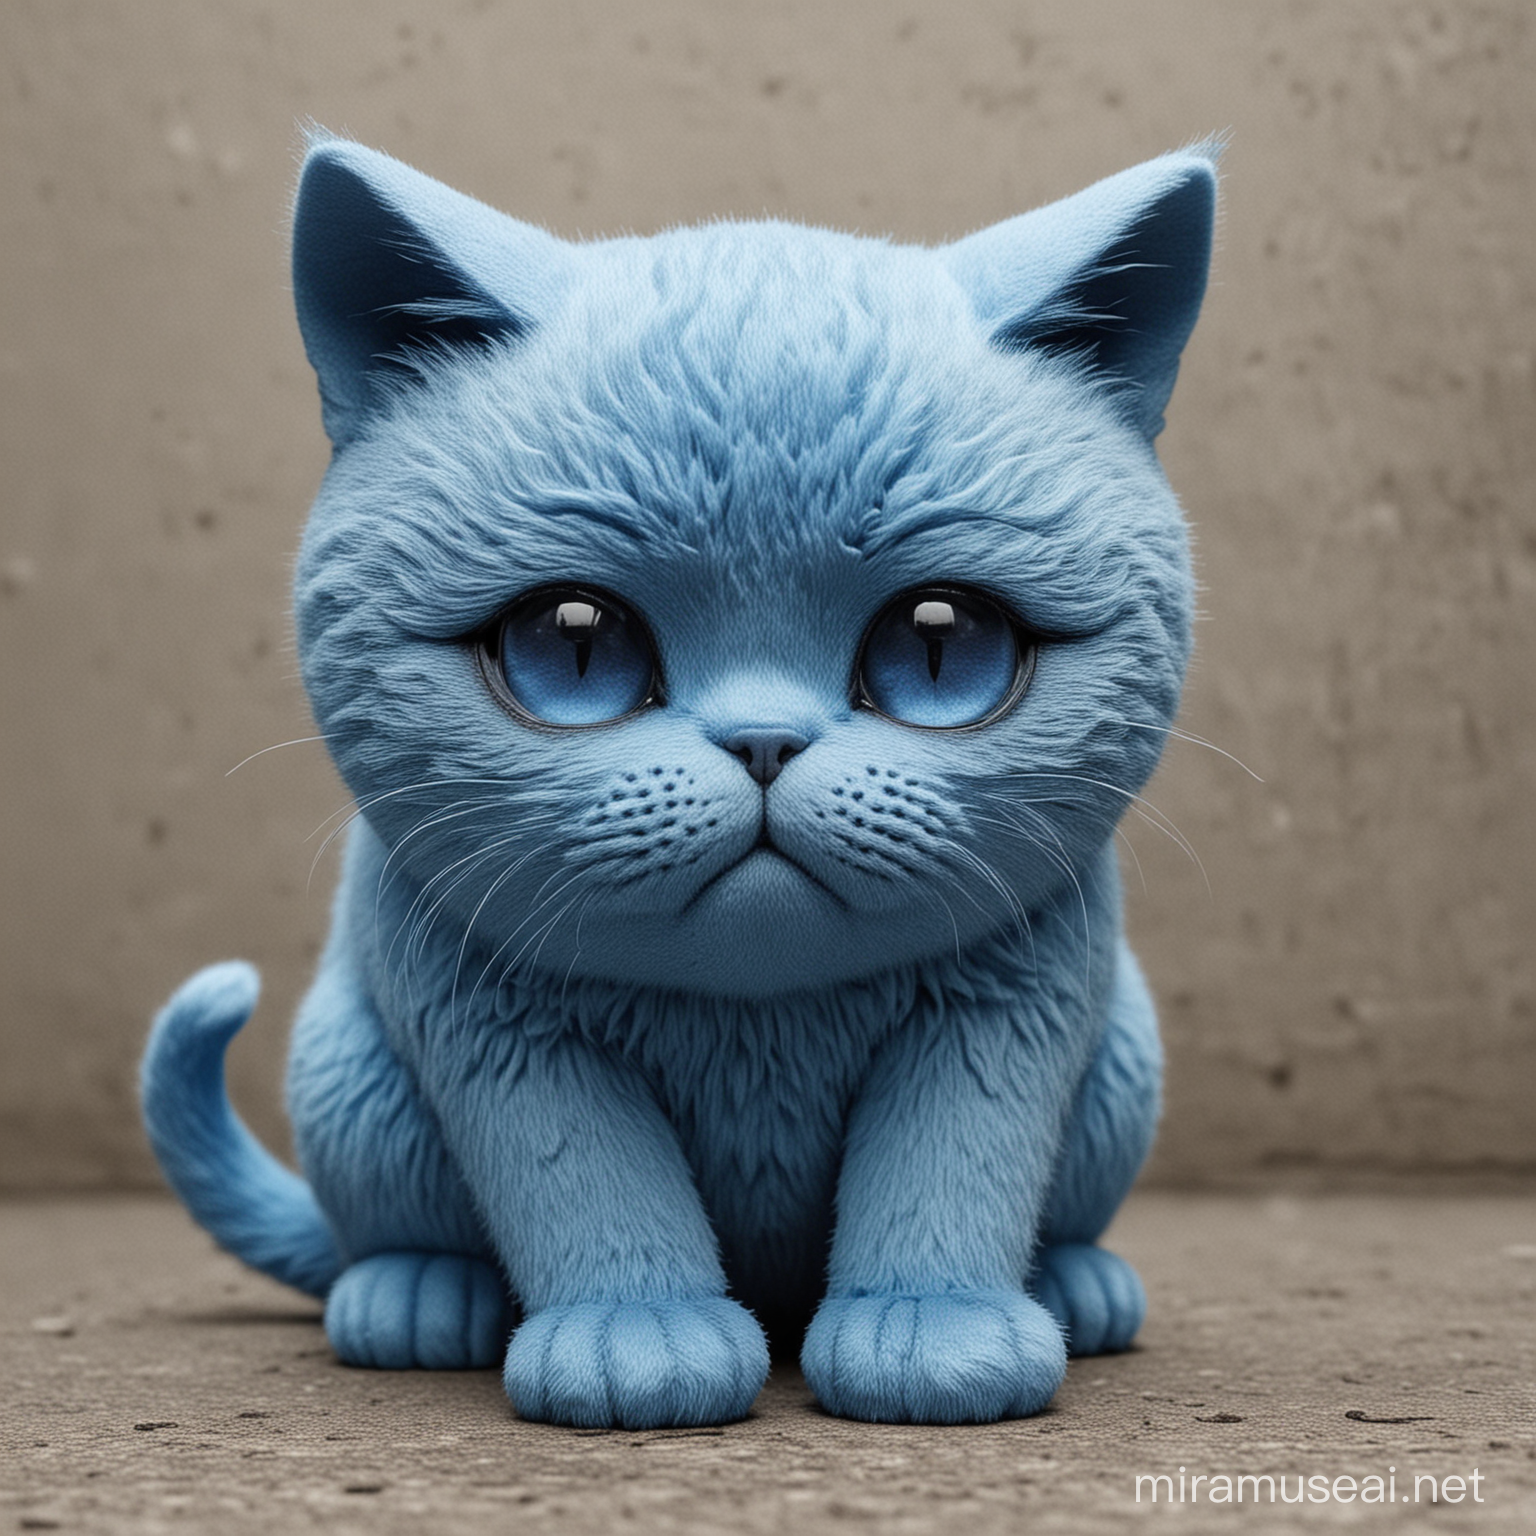 Melancholic Blue Cat Gazing into the Distance